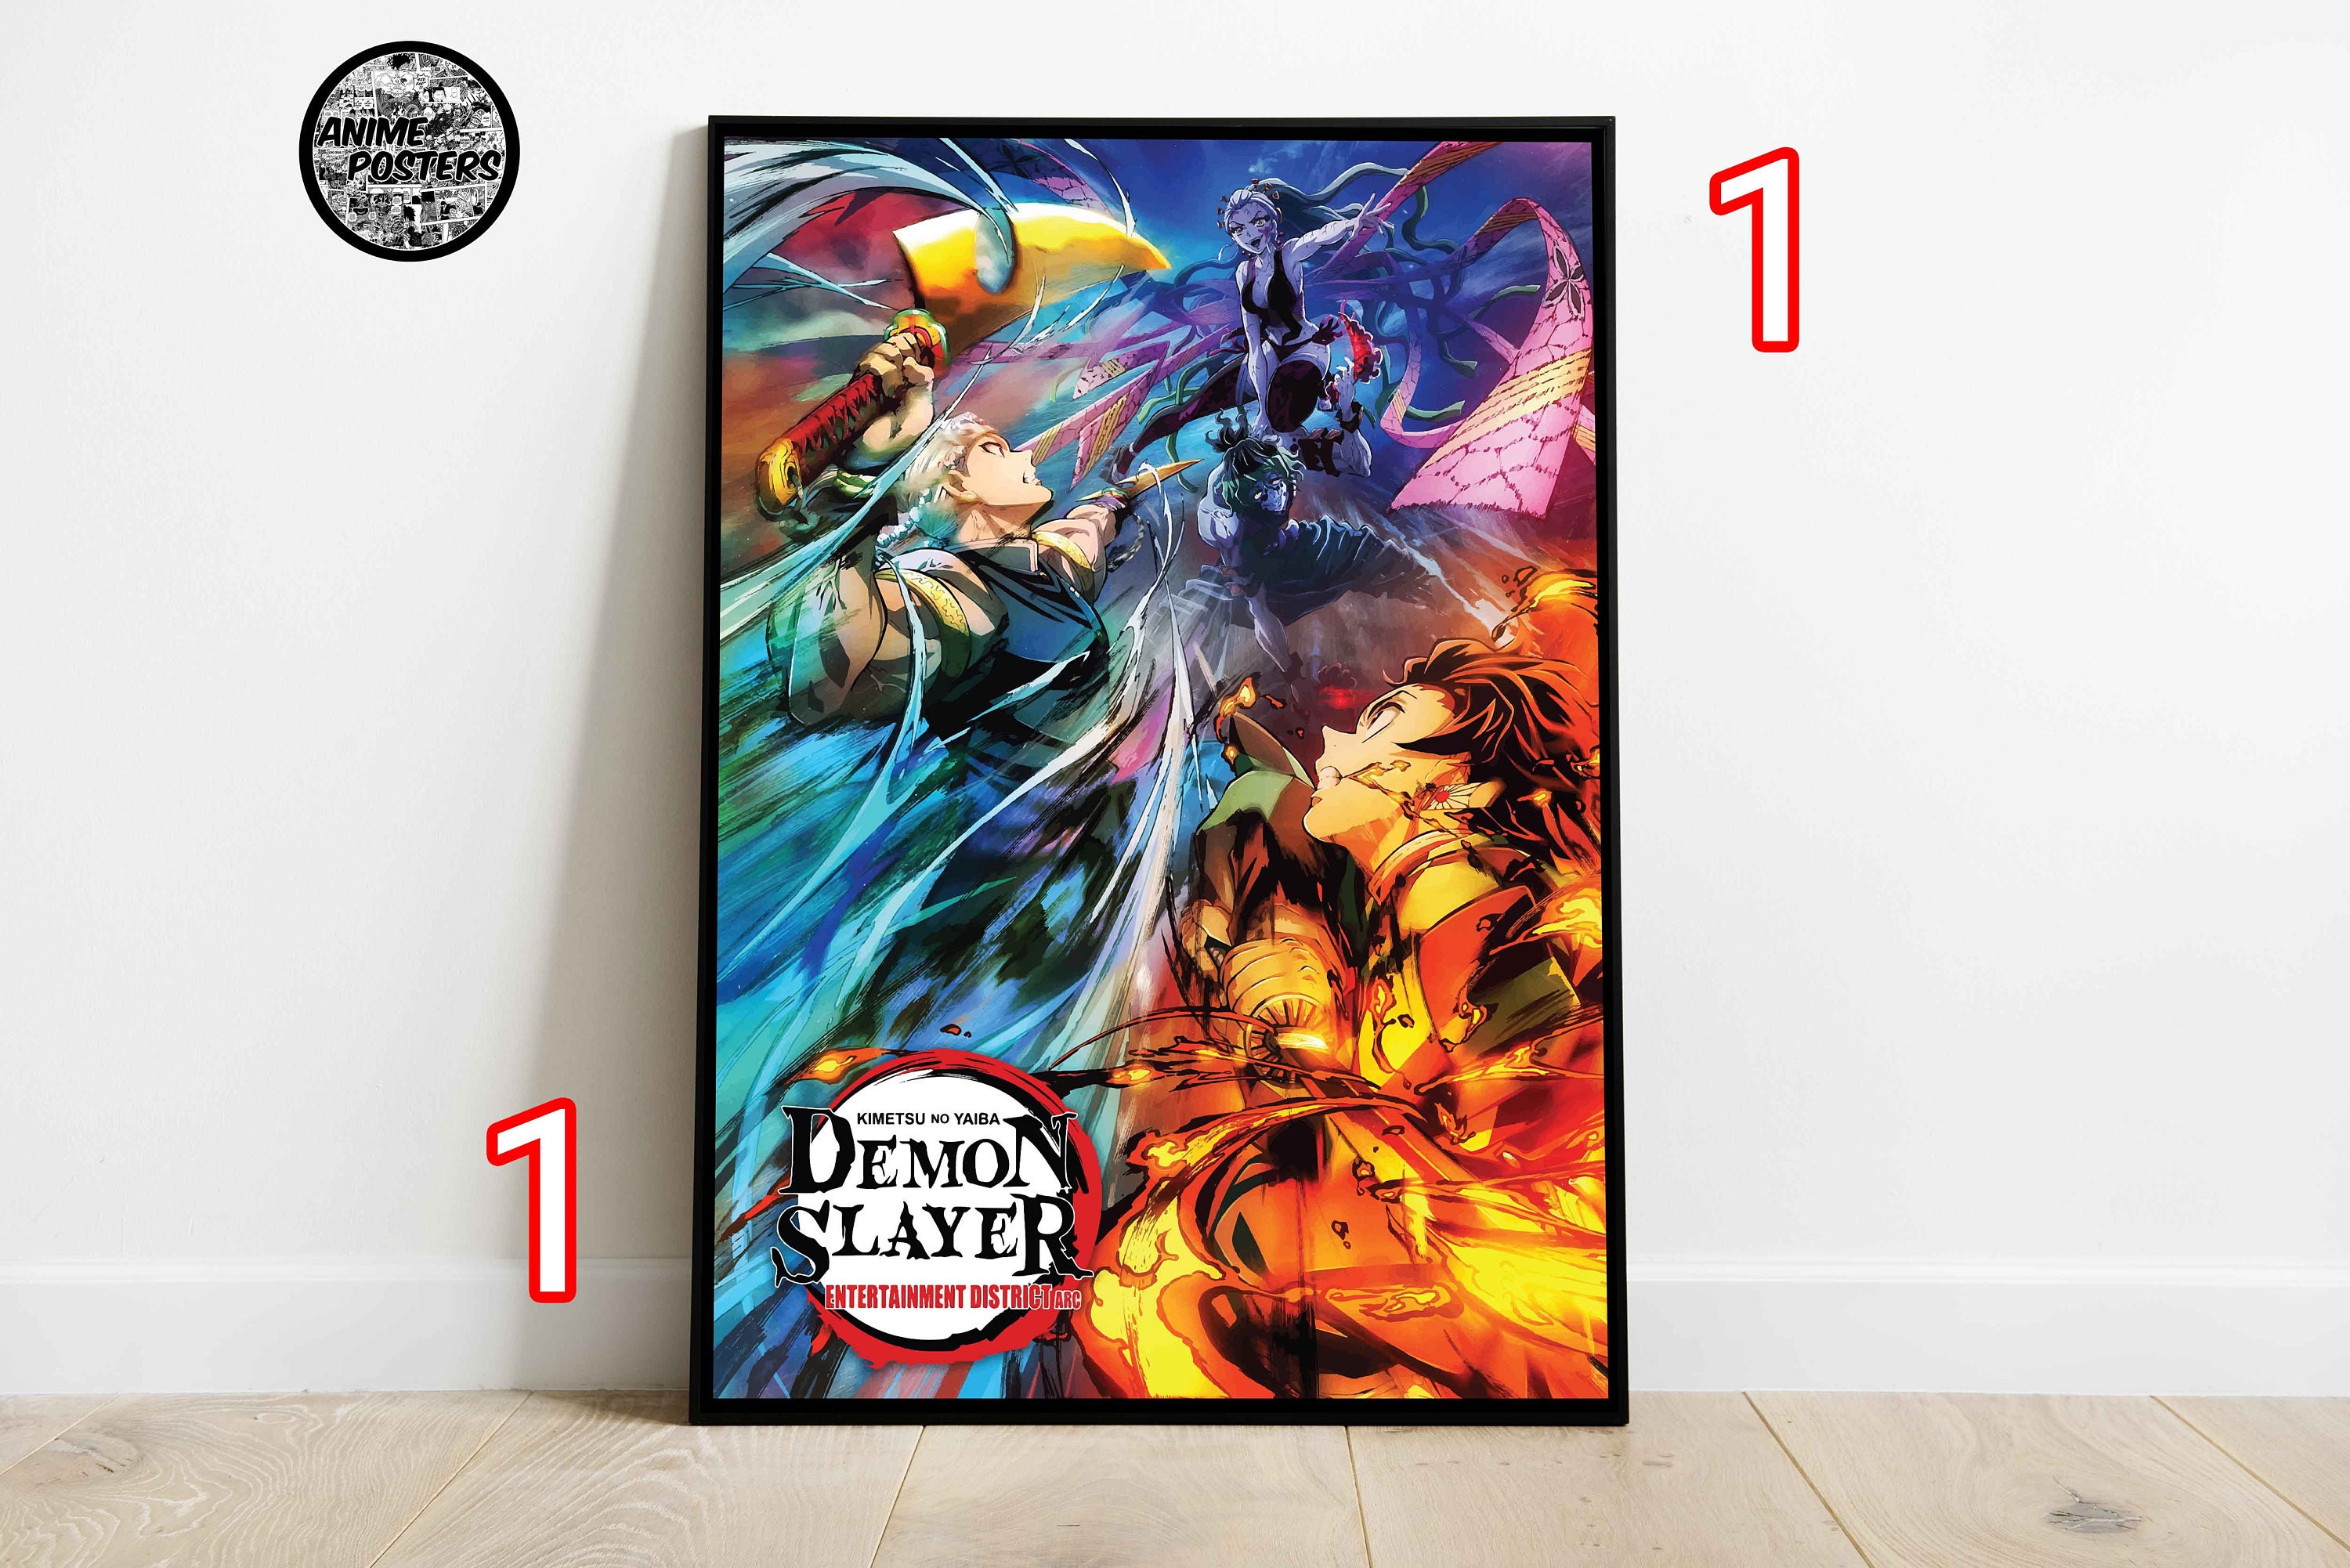 Demon Slayer: Kimetsu no Yaiba Season 2 Official Poster - High Quality  Prints 11x17 